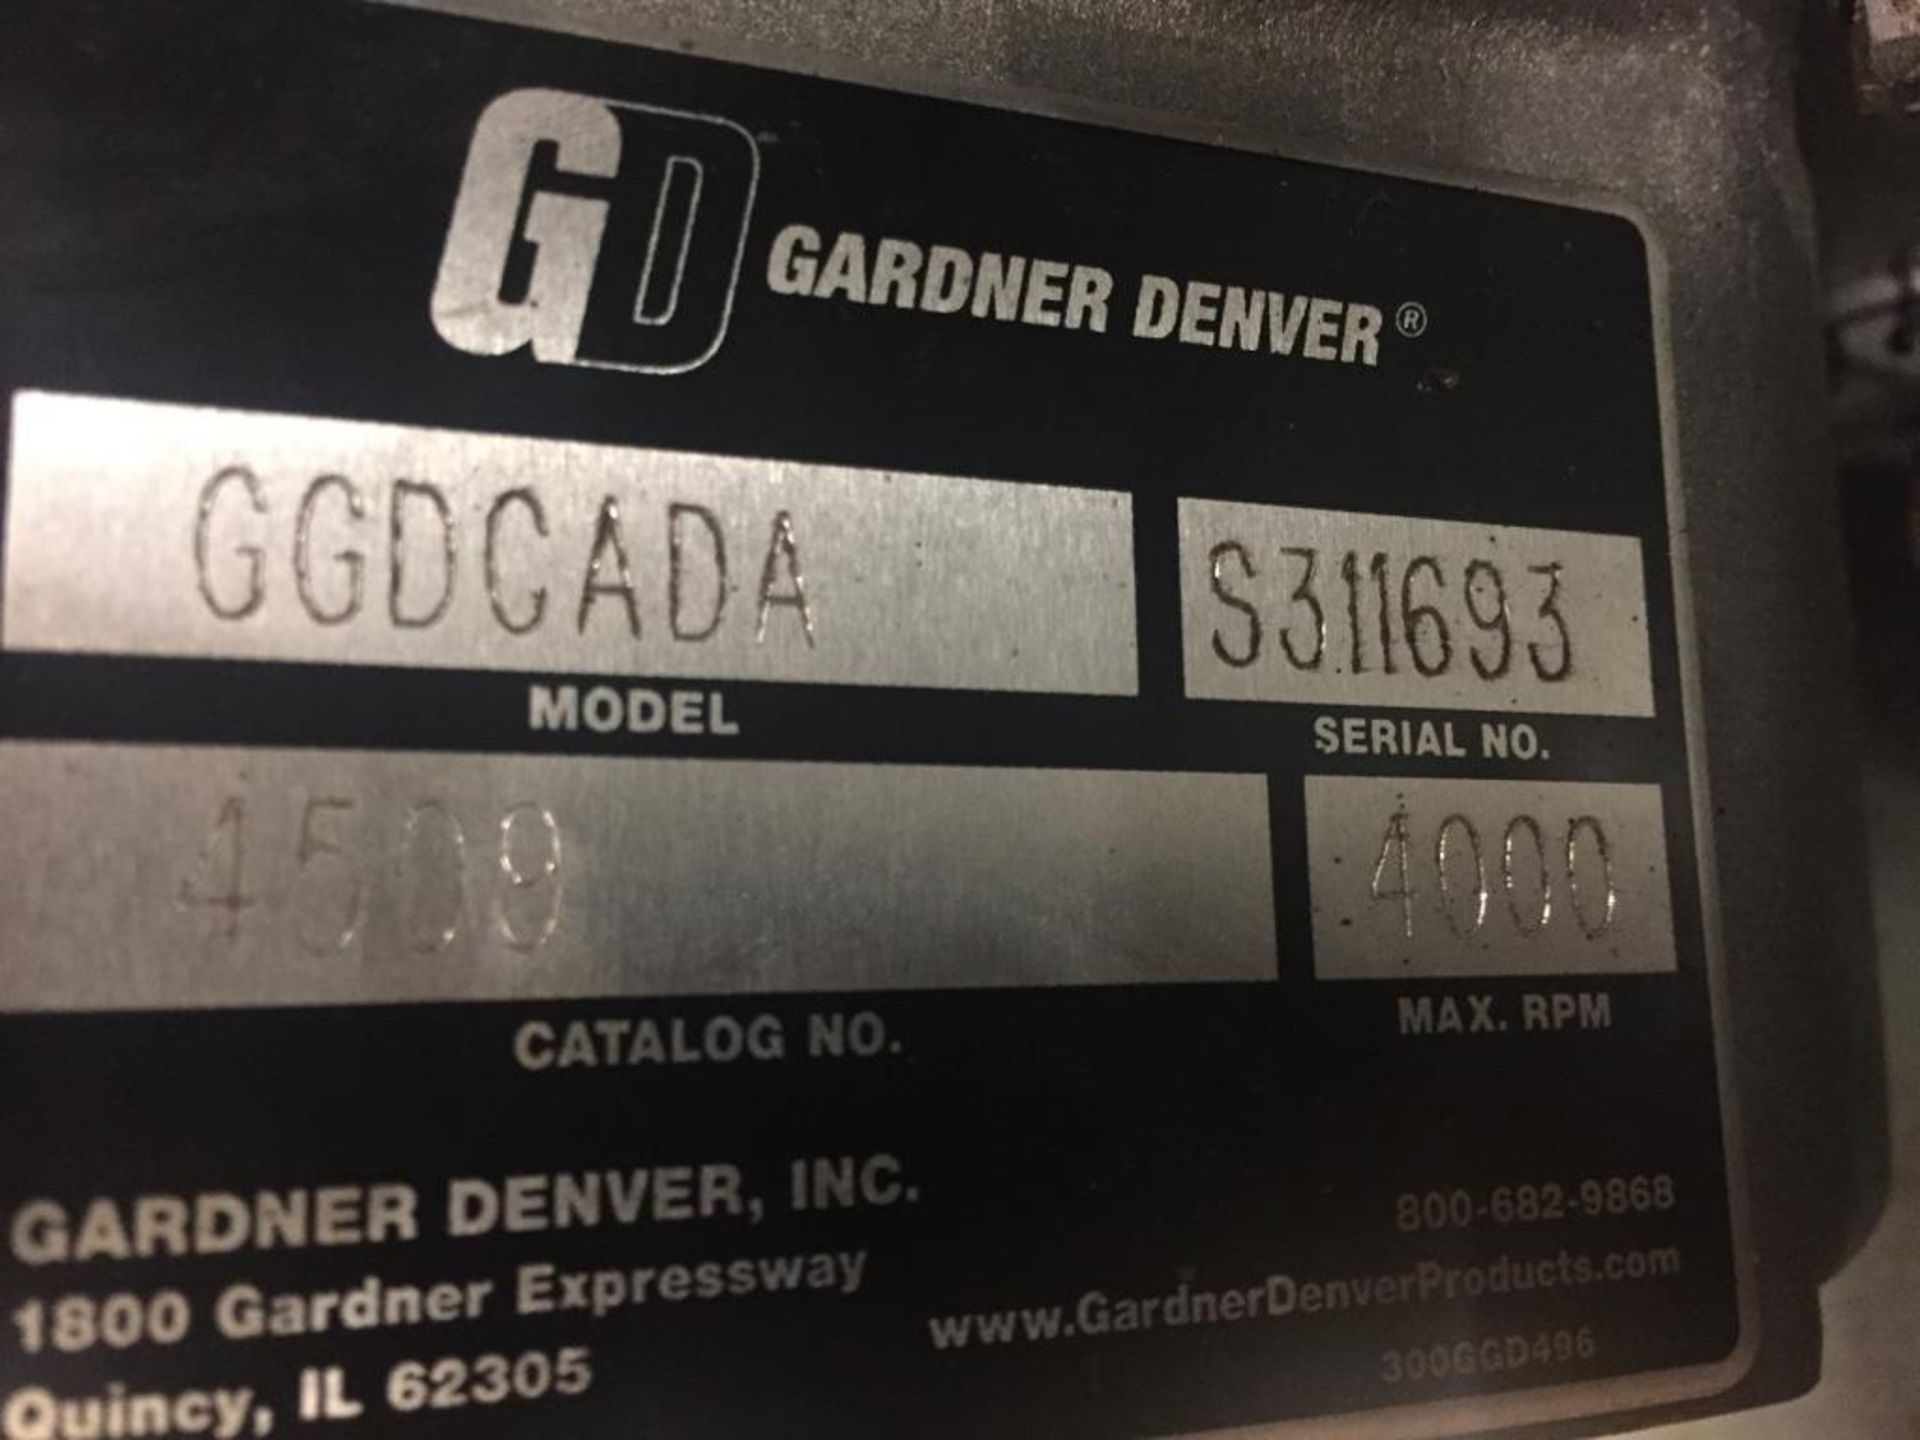 Blower Package With Gardner Denver Blower Model GGDCADA S/N S311693 Catalog 4509 Max RPM 4000 - Image 4 of 4